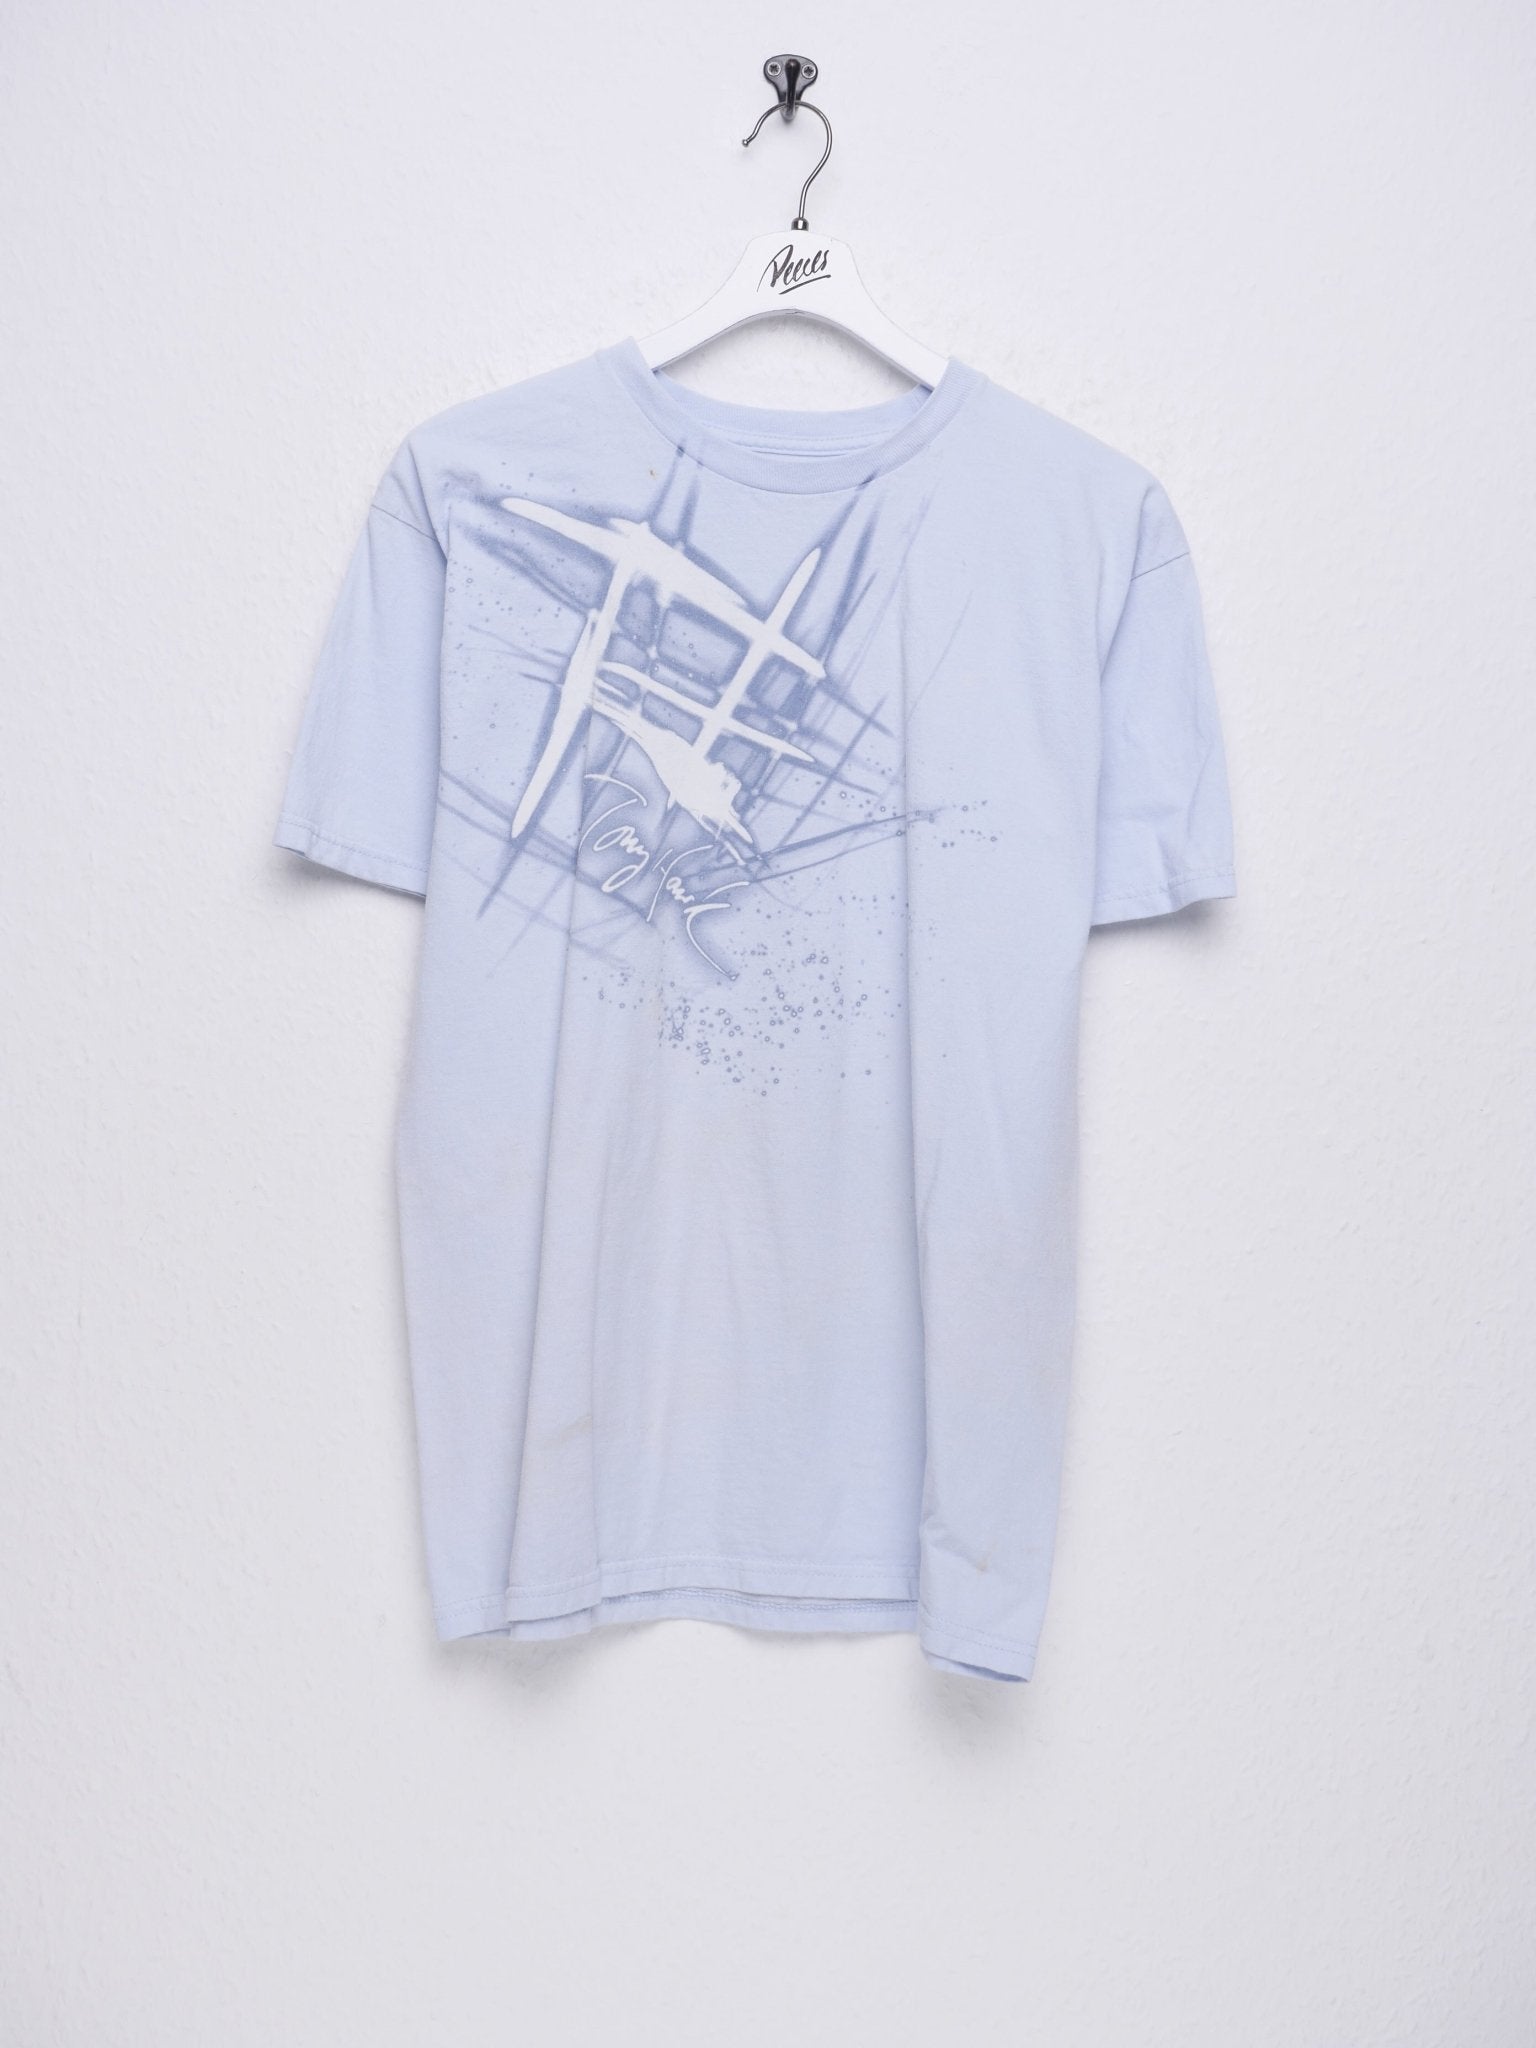 Tony Hawk printed Graphic light blue Shirt - Peeces